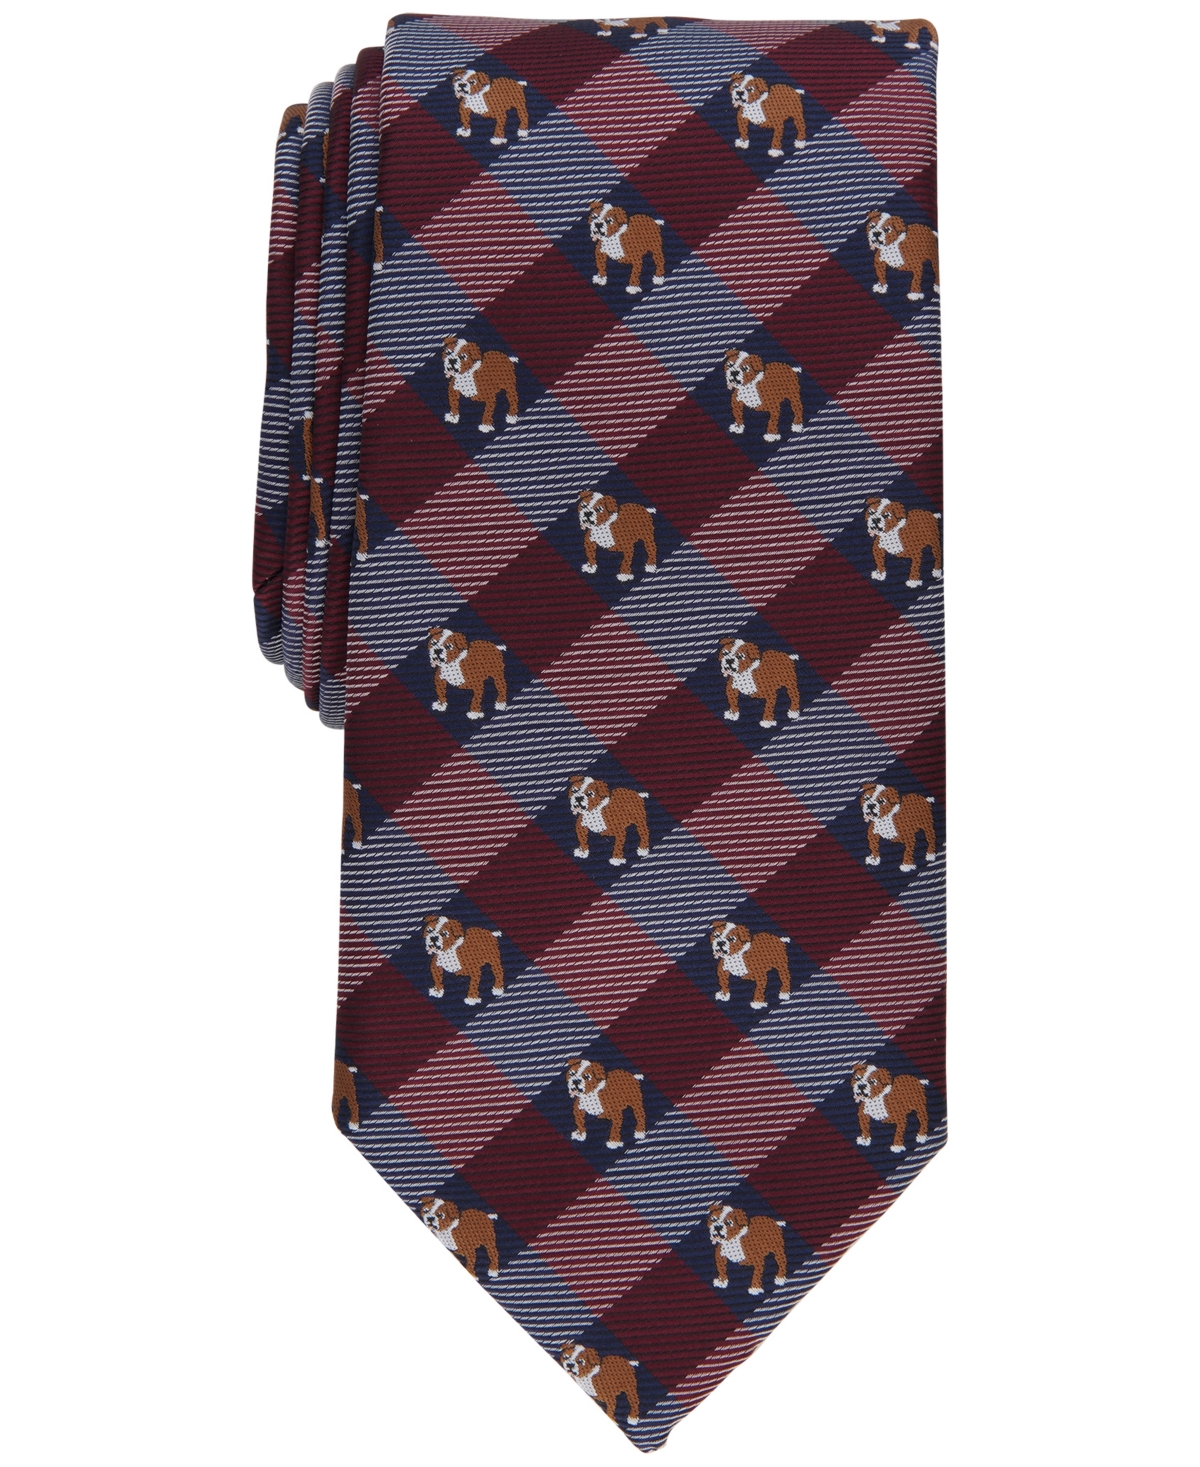 Men's Murray Plaid Dog Tie, Created for Macy's - Burgundy